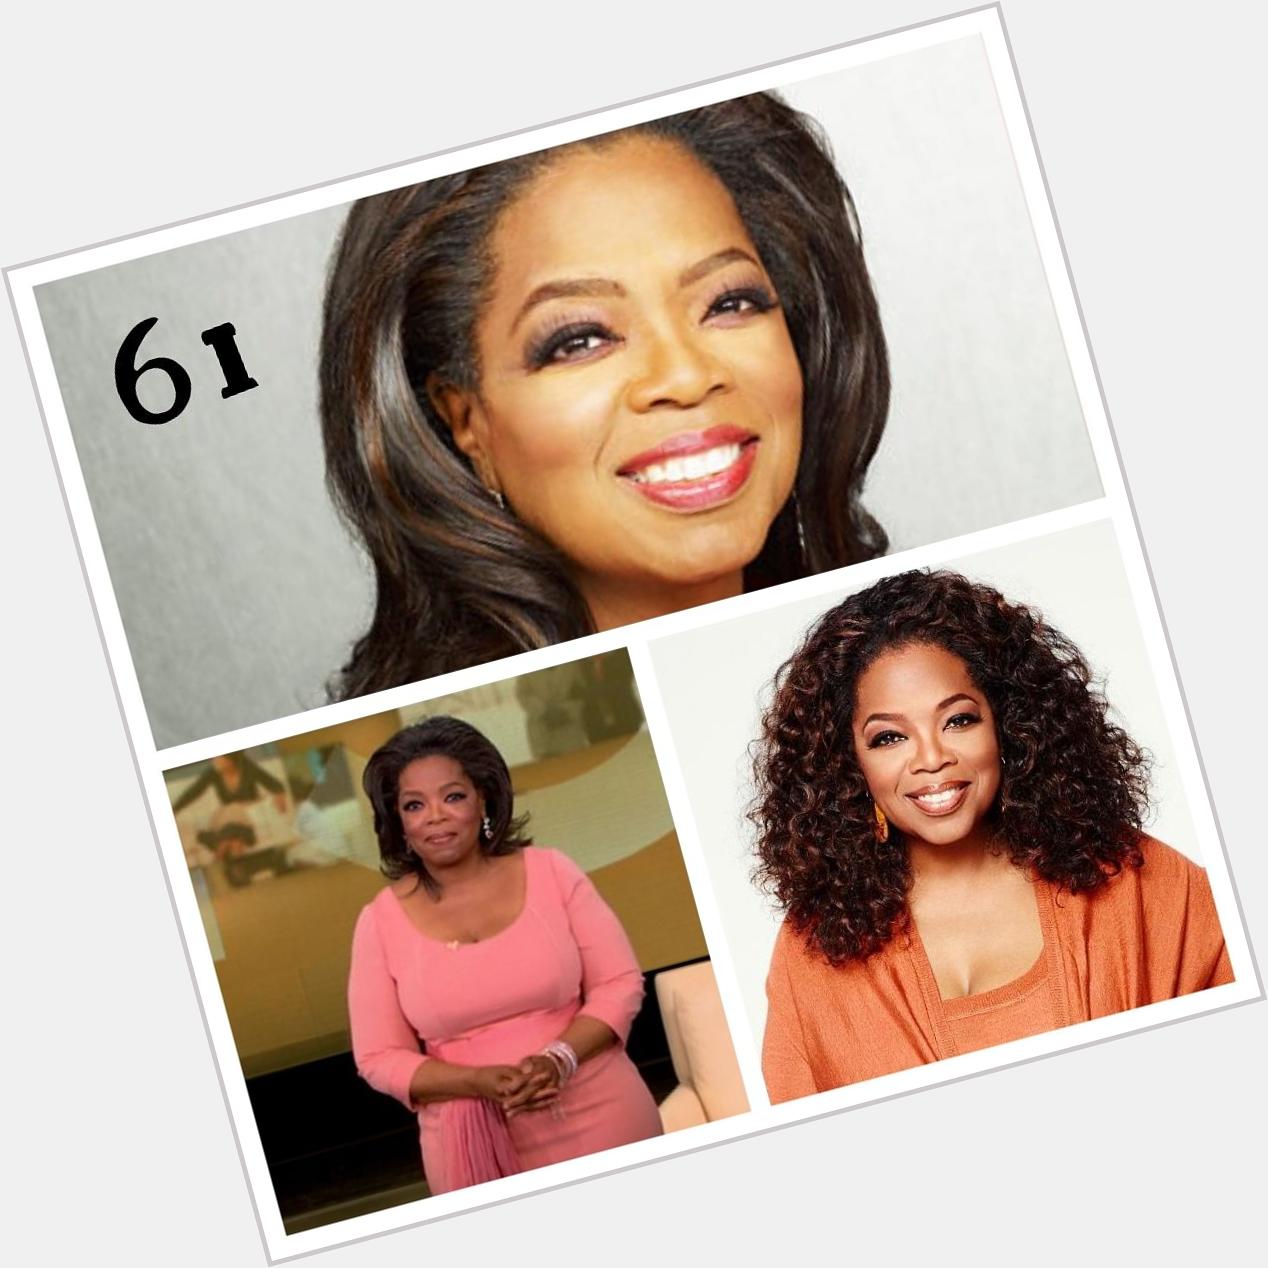  happy 61st birthday oprah winfrey . We love you 